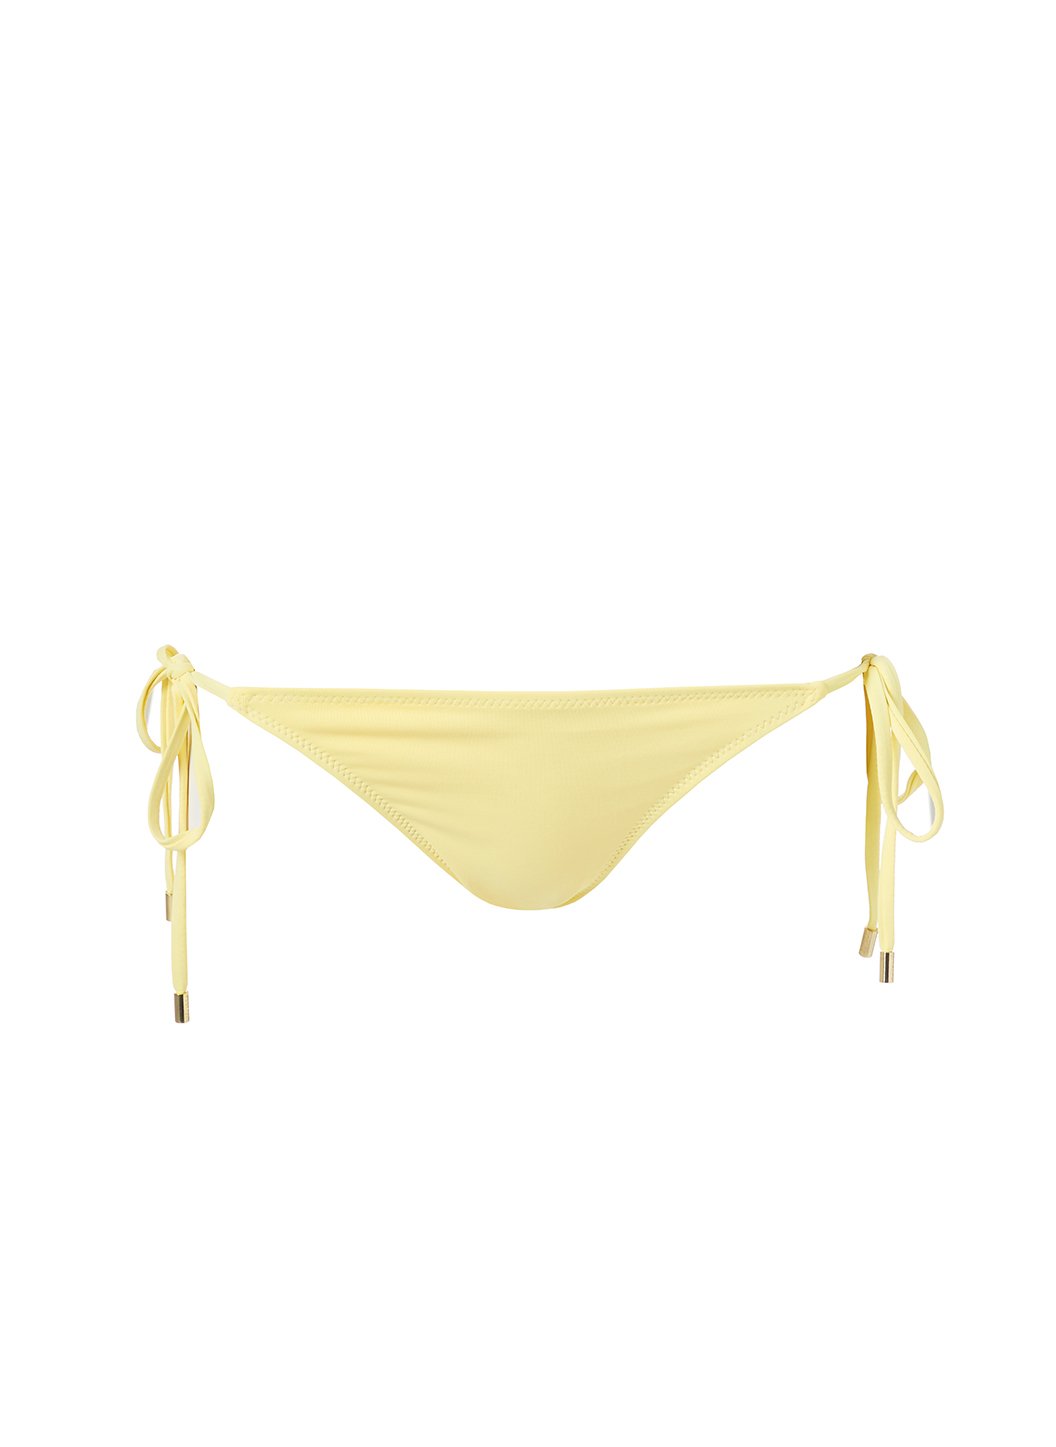 maldives-yellow-chain-trim-triangle-bikini-bottom